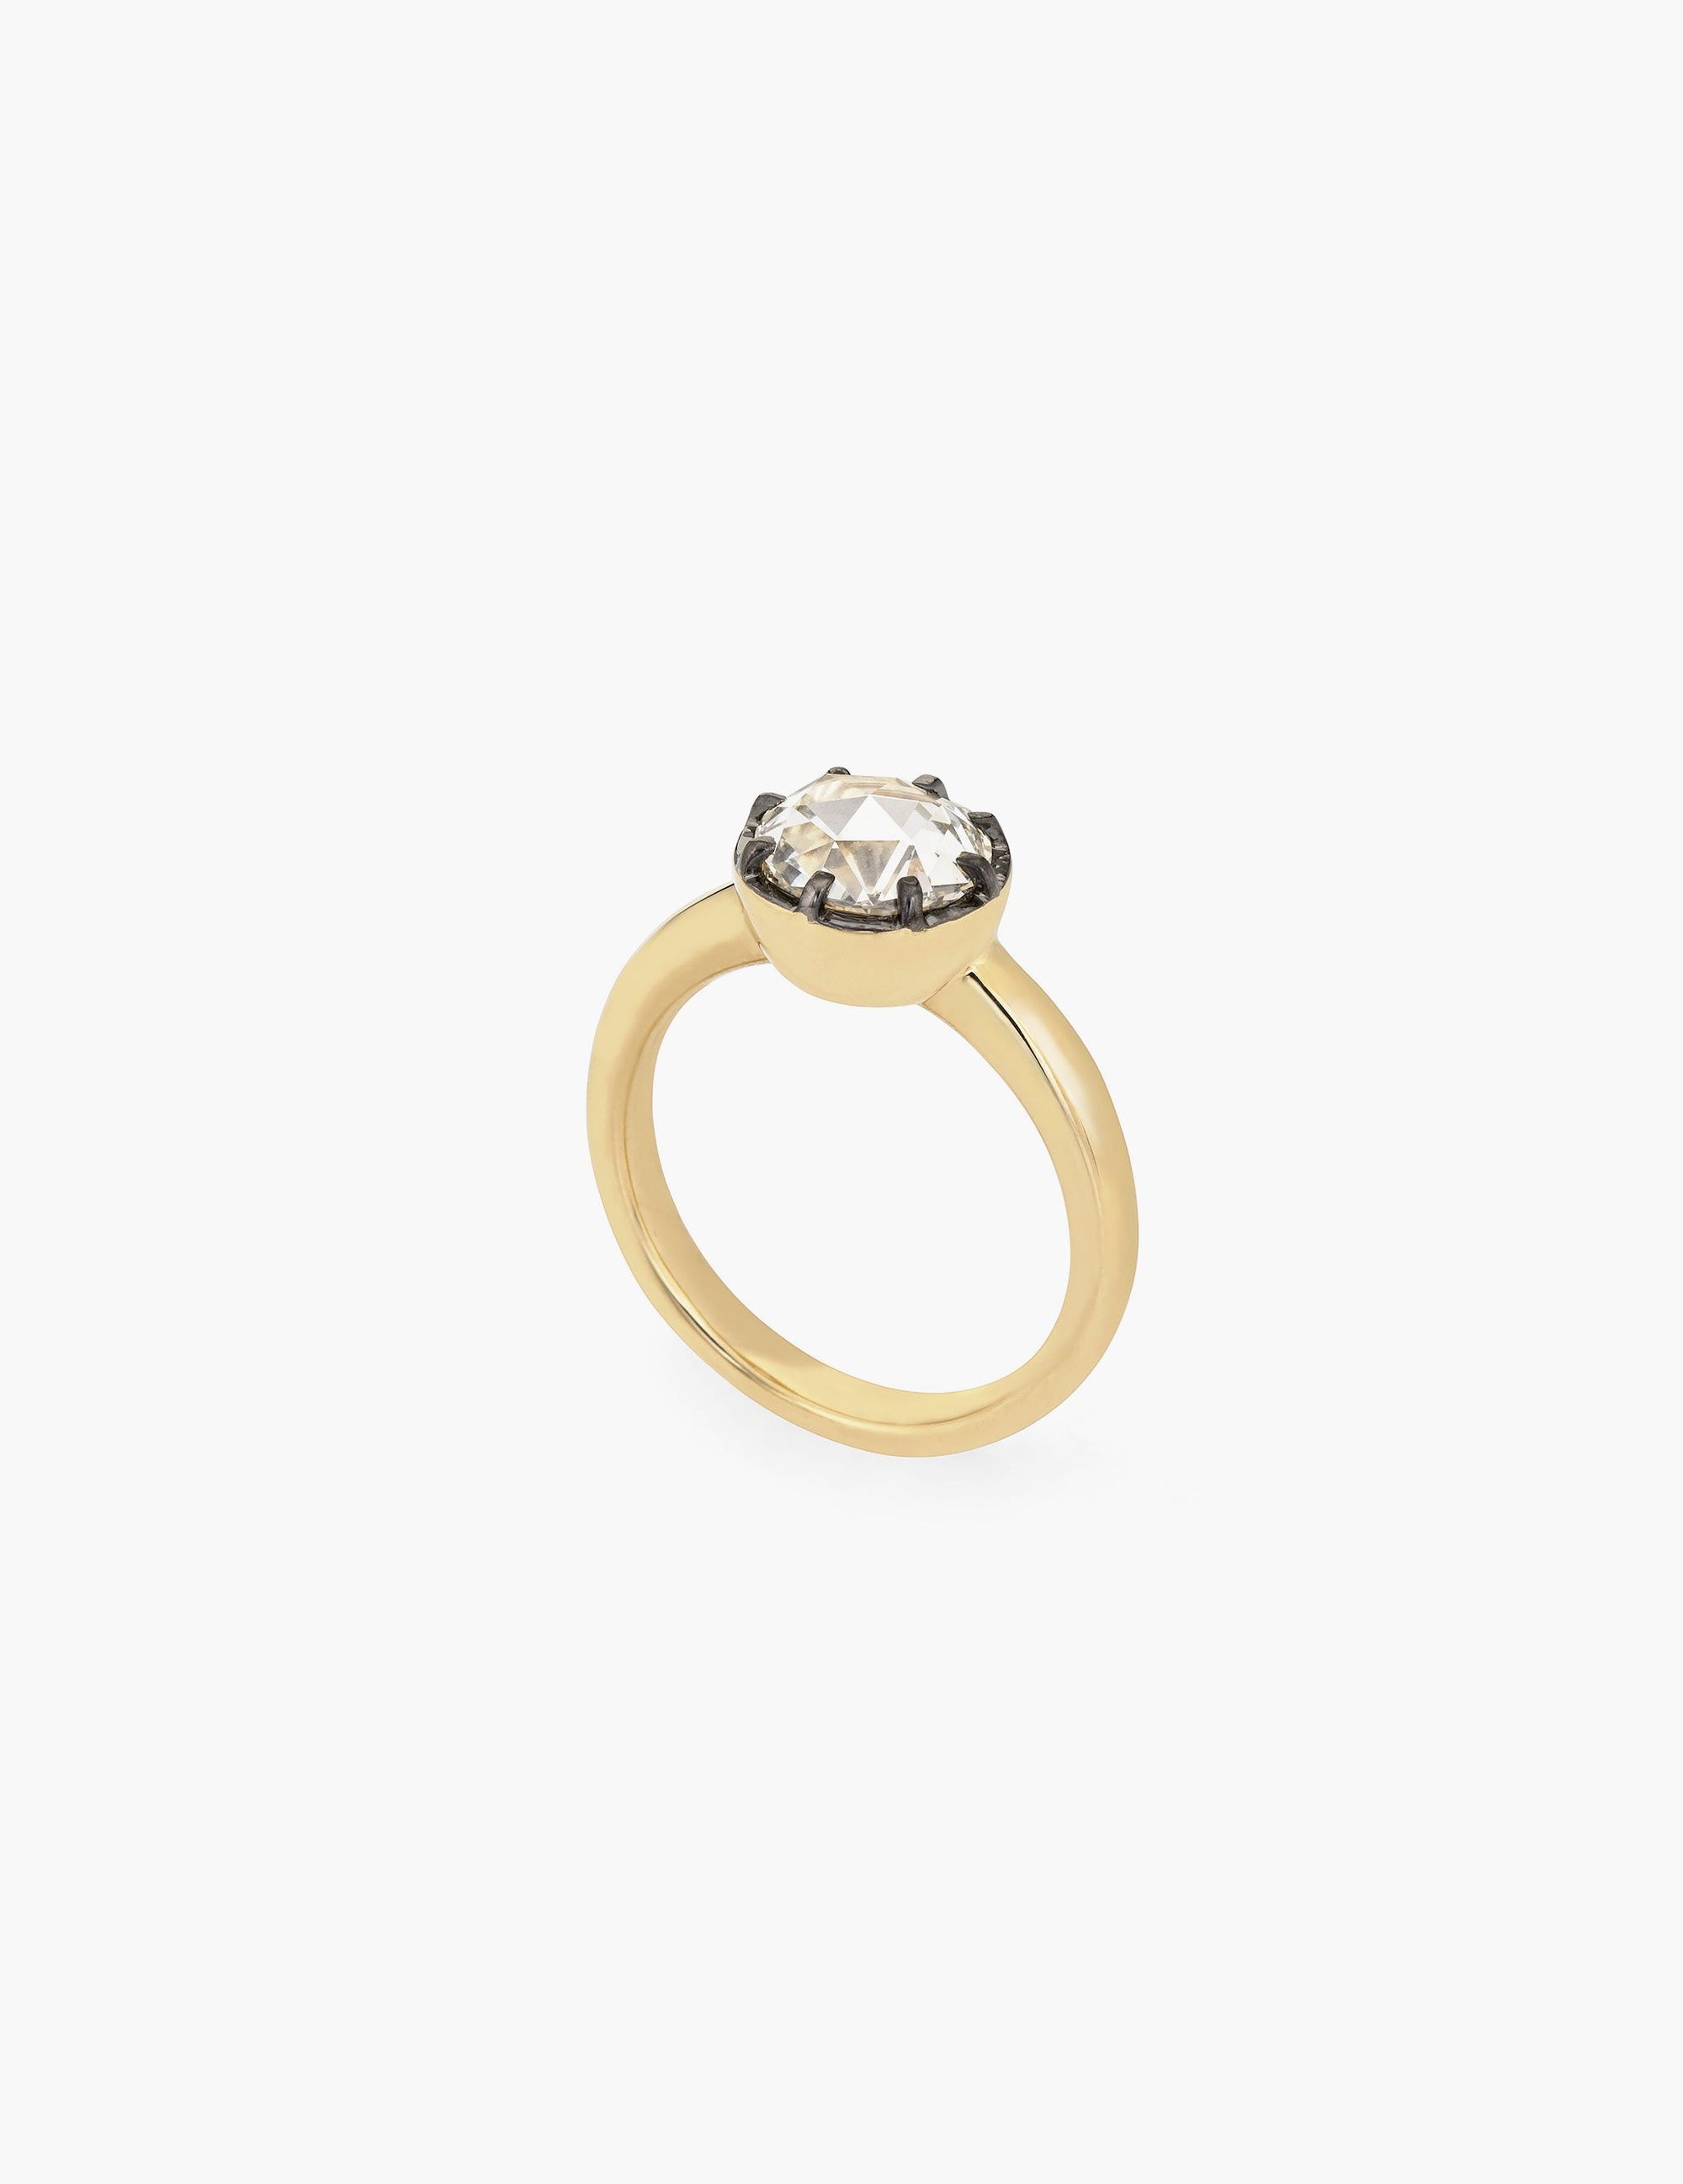 Rose Cut Diamond Ring with Black Rhodium